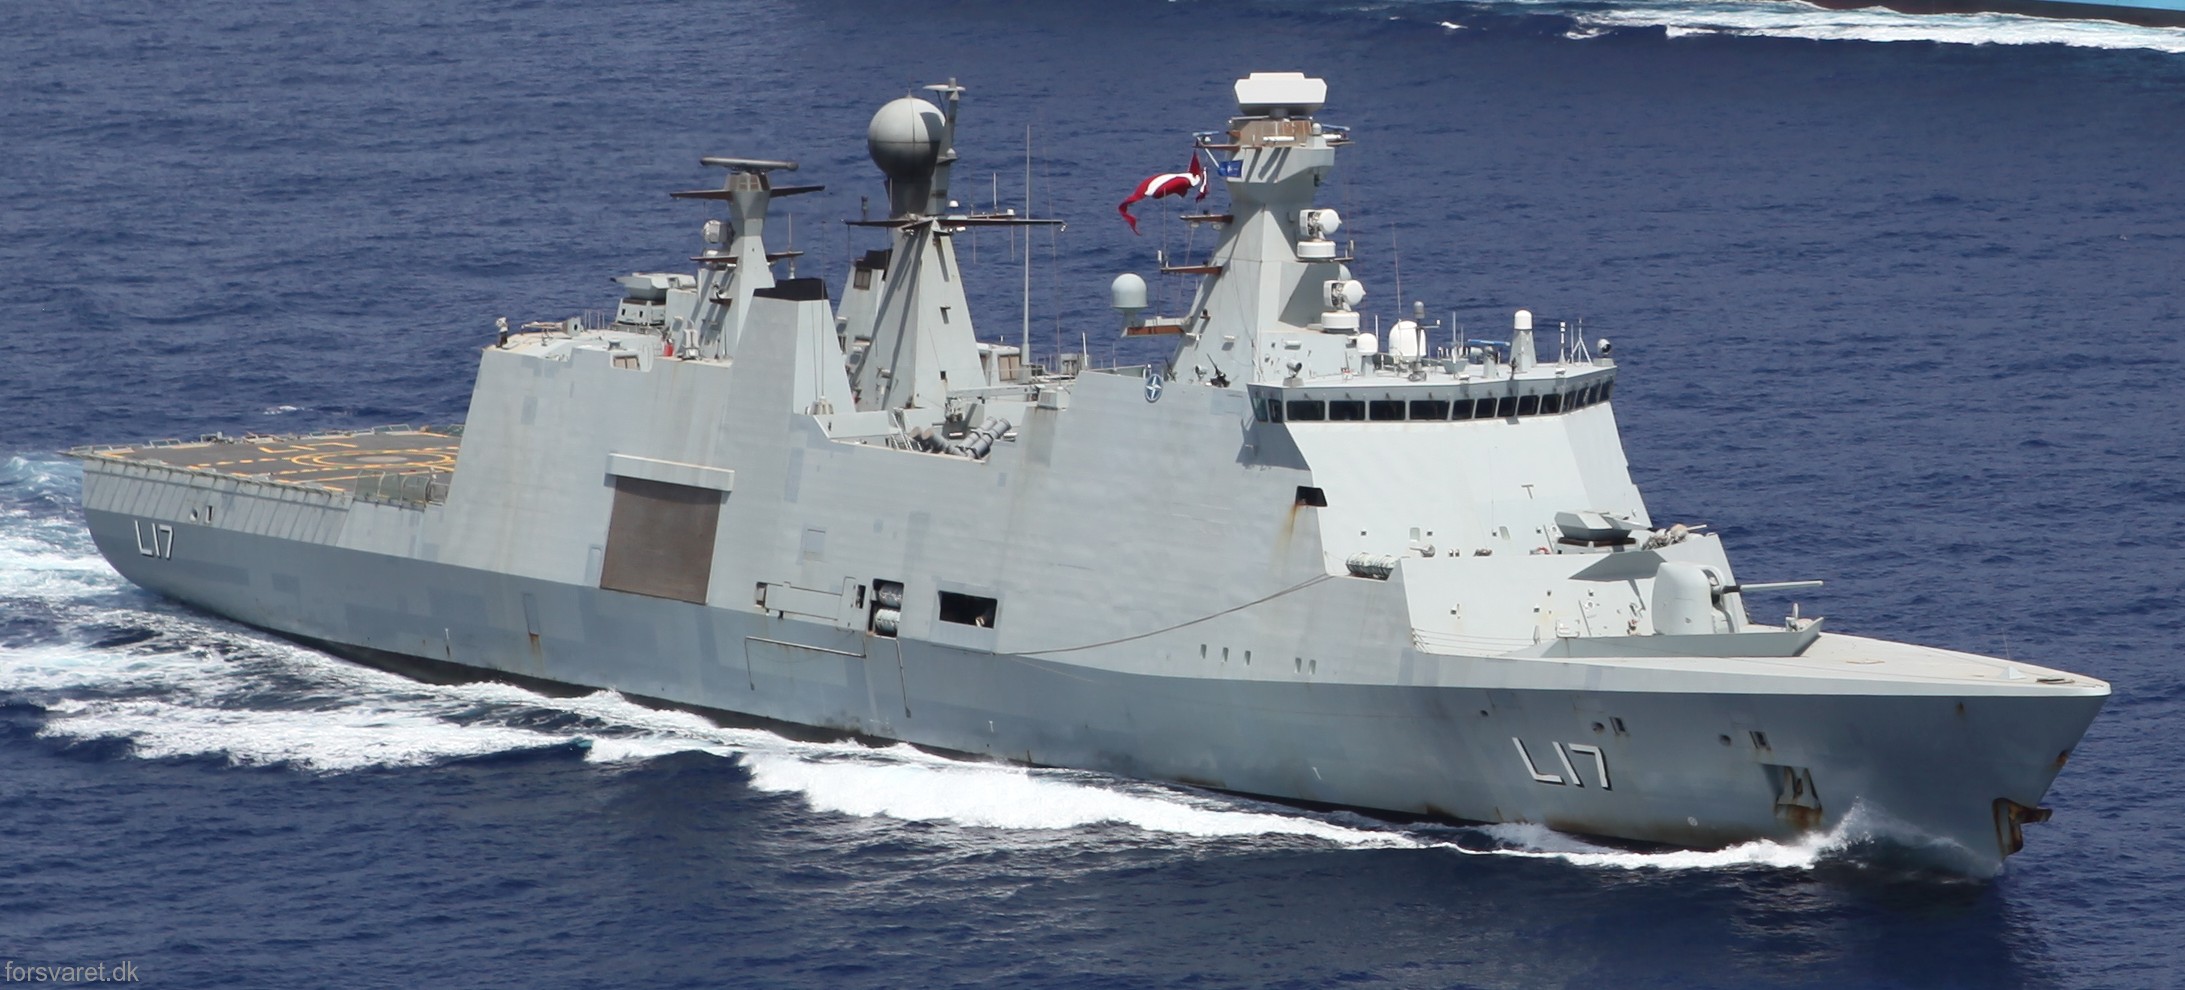 f-342 hdms esbern snare l-17 frigate command support ship royal danish navy 65